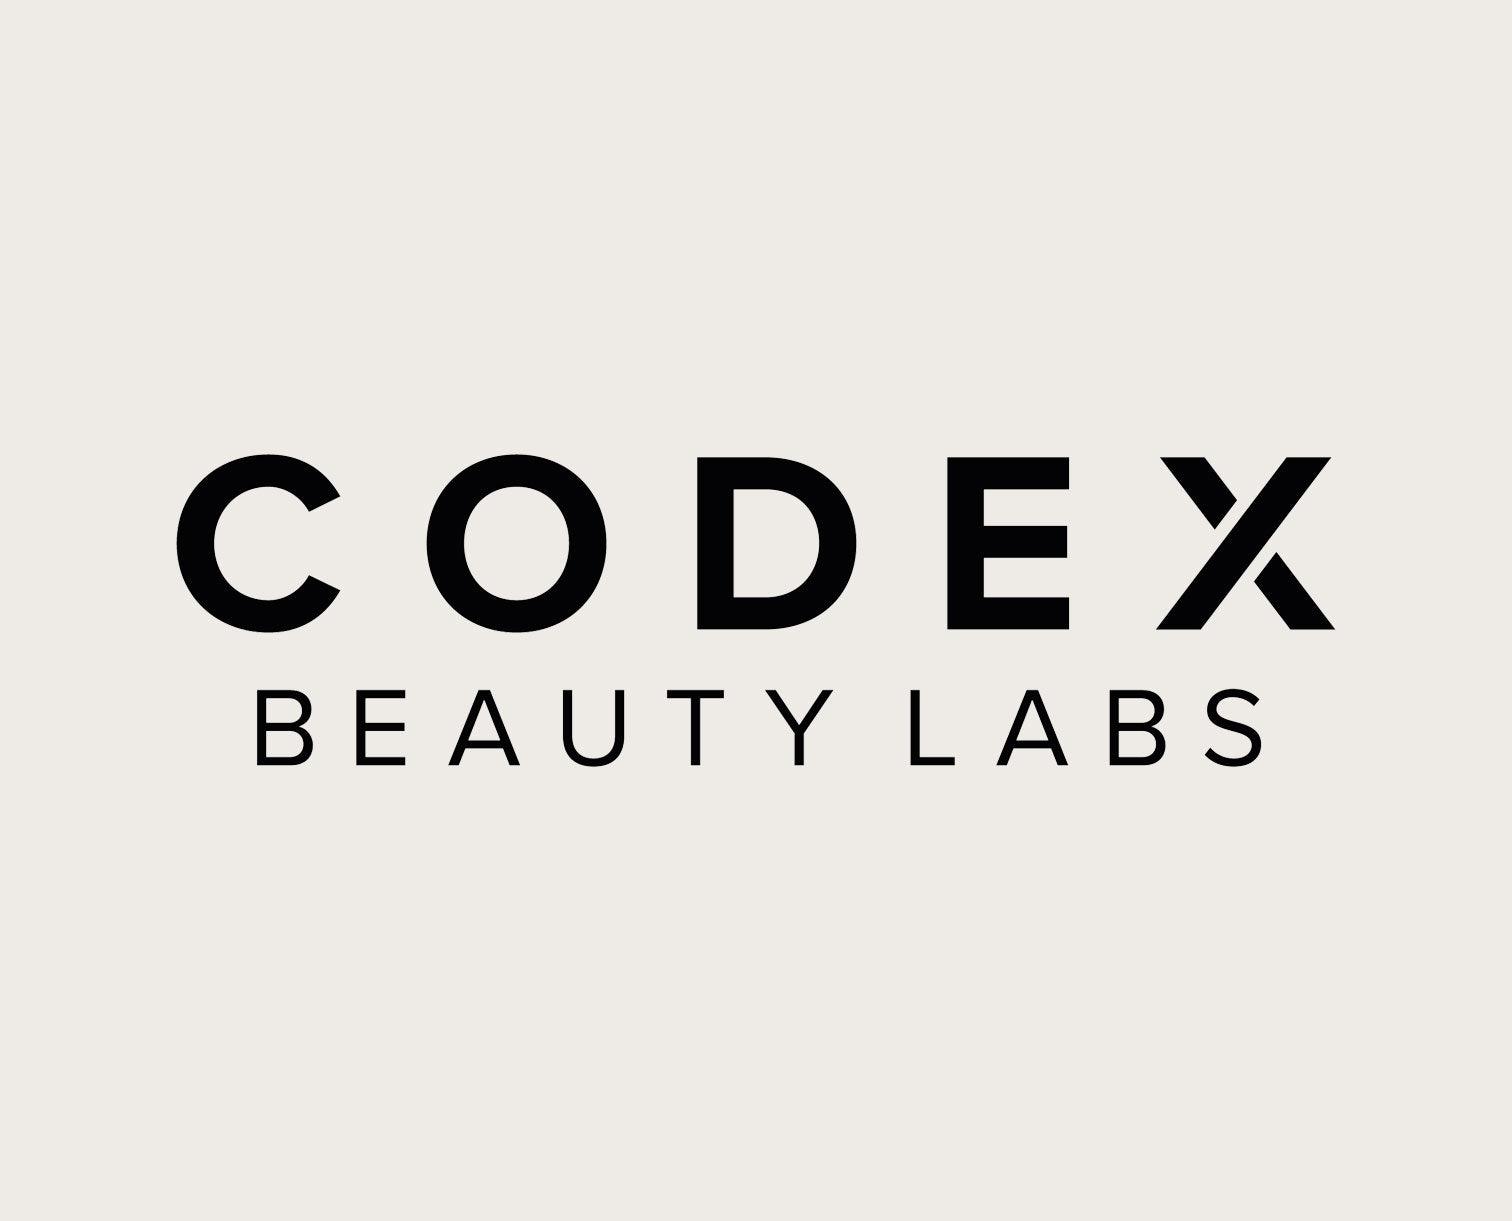 Image of Codex Beauty Labs logo